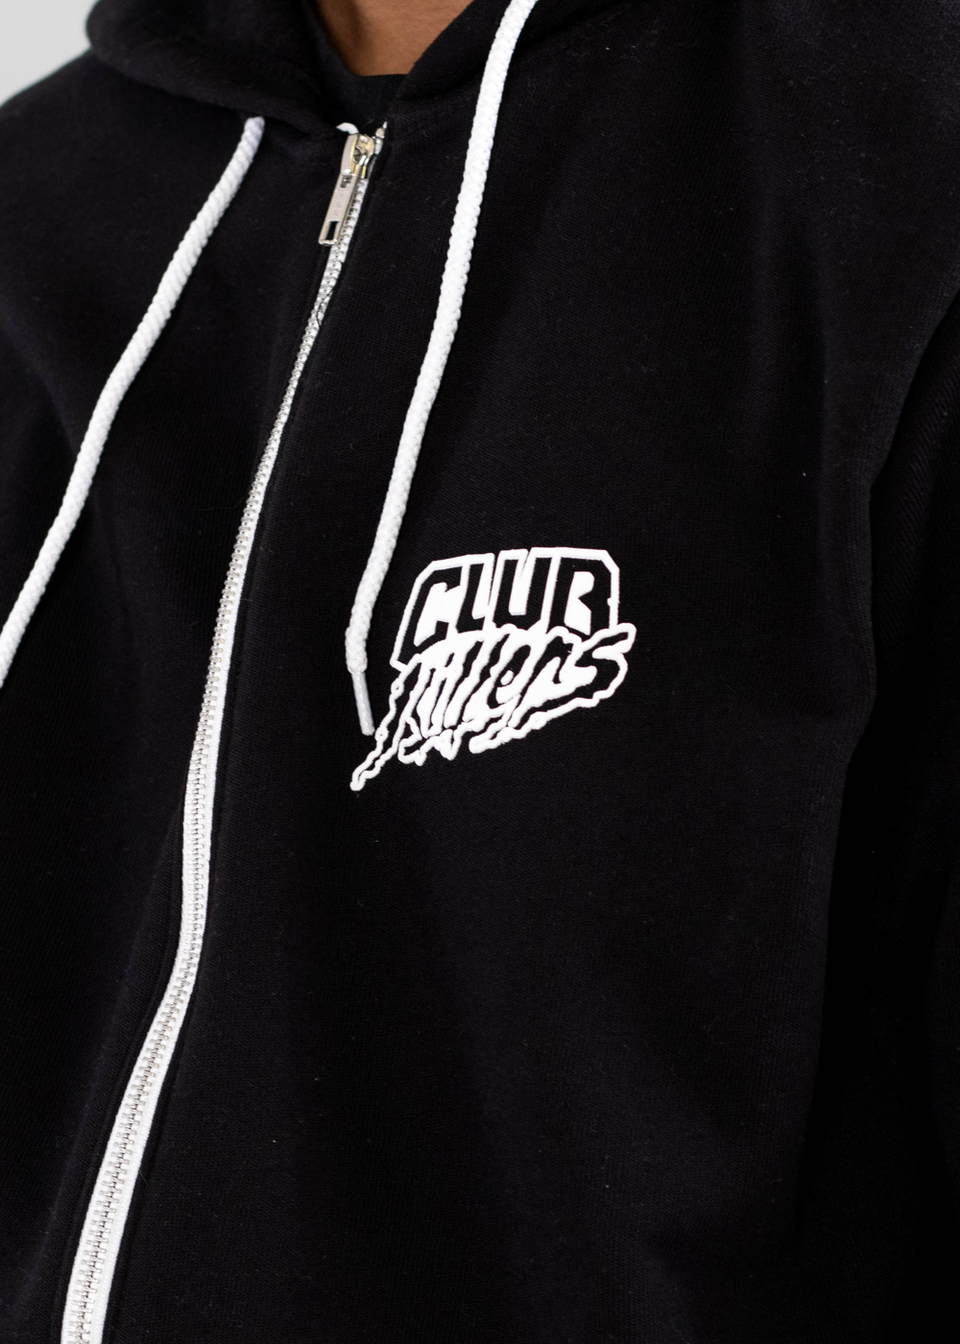 HD Club Killers Logo Print On Pocket Area